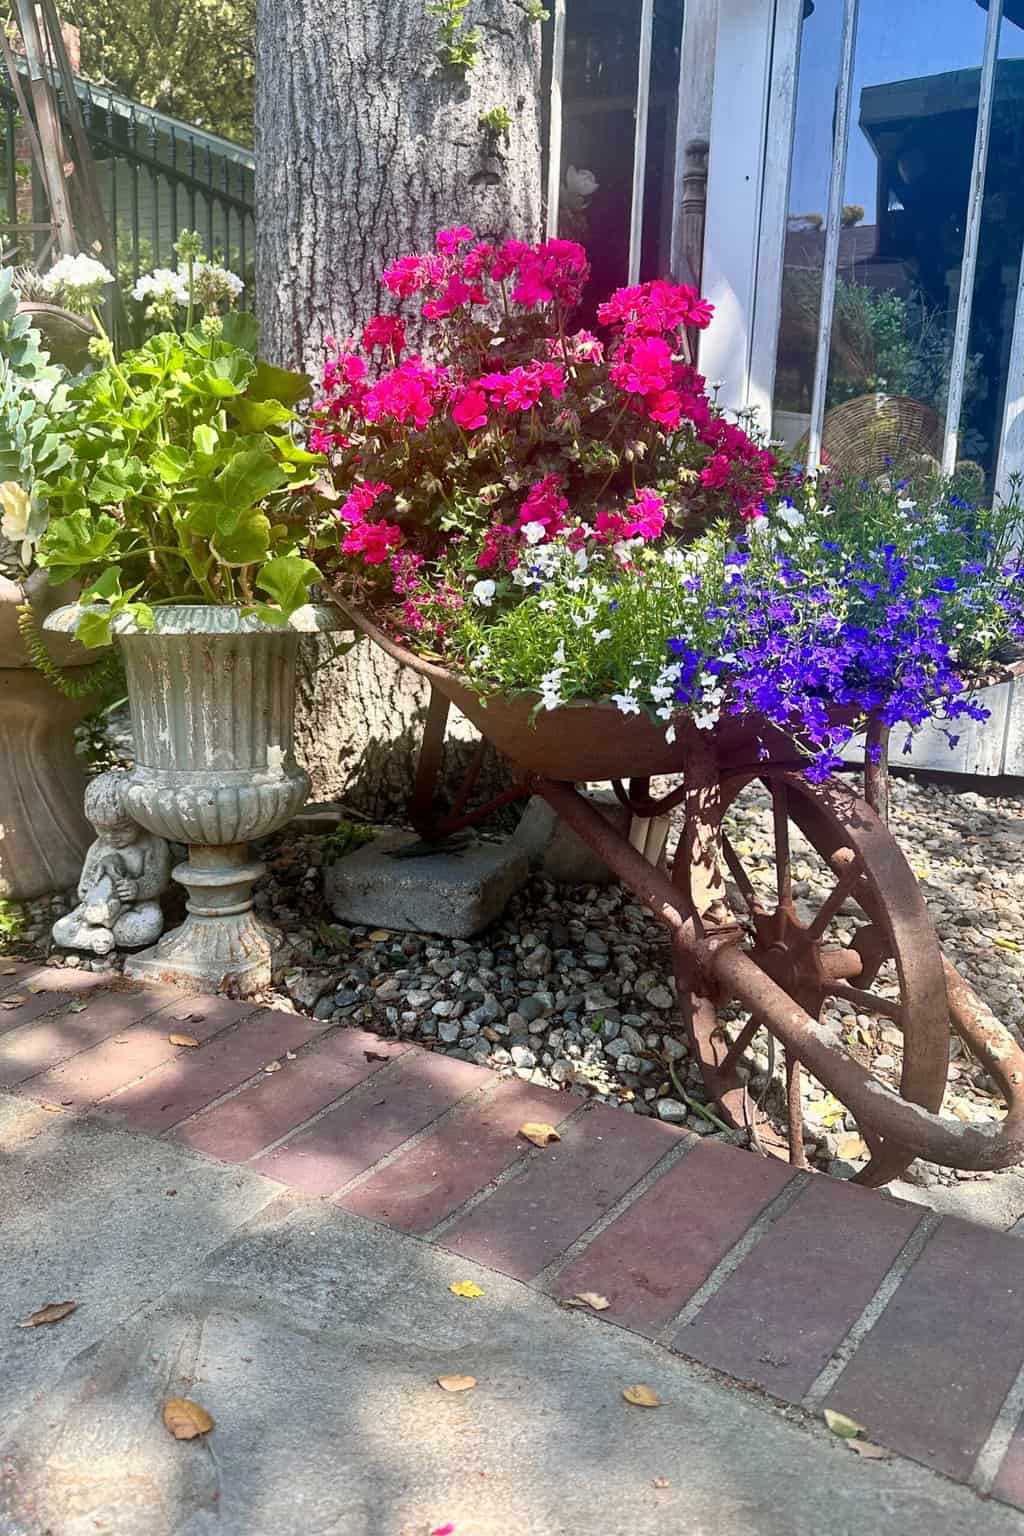 An old metal wheelbarrow filled with pink geraniums and blue lobelia.